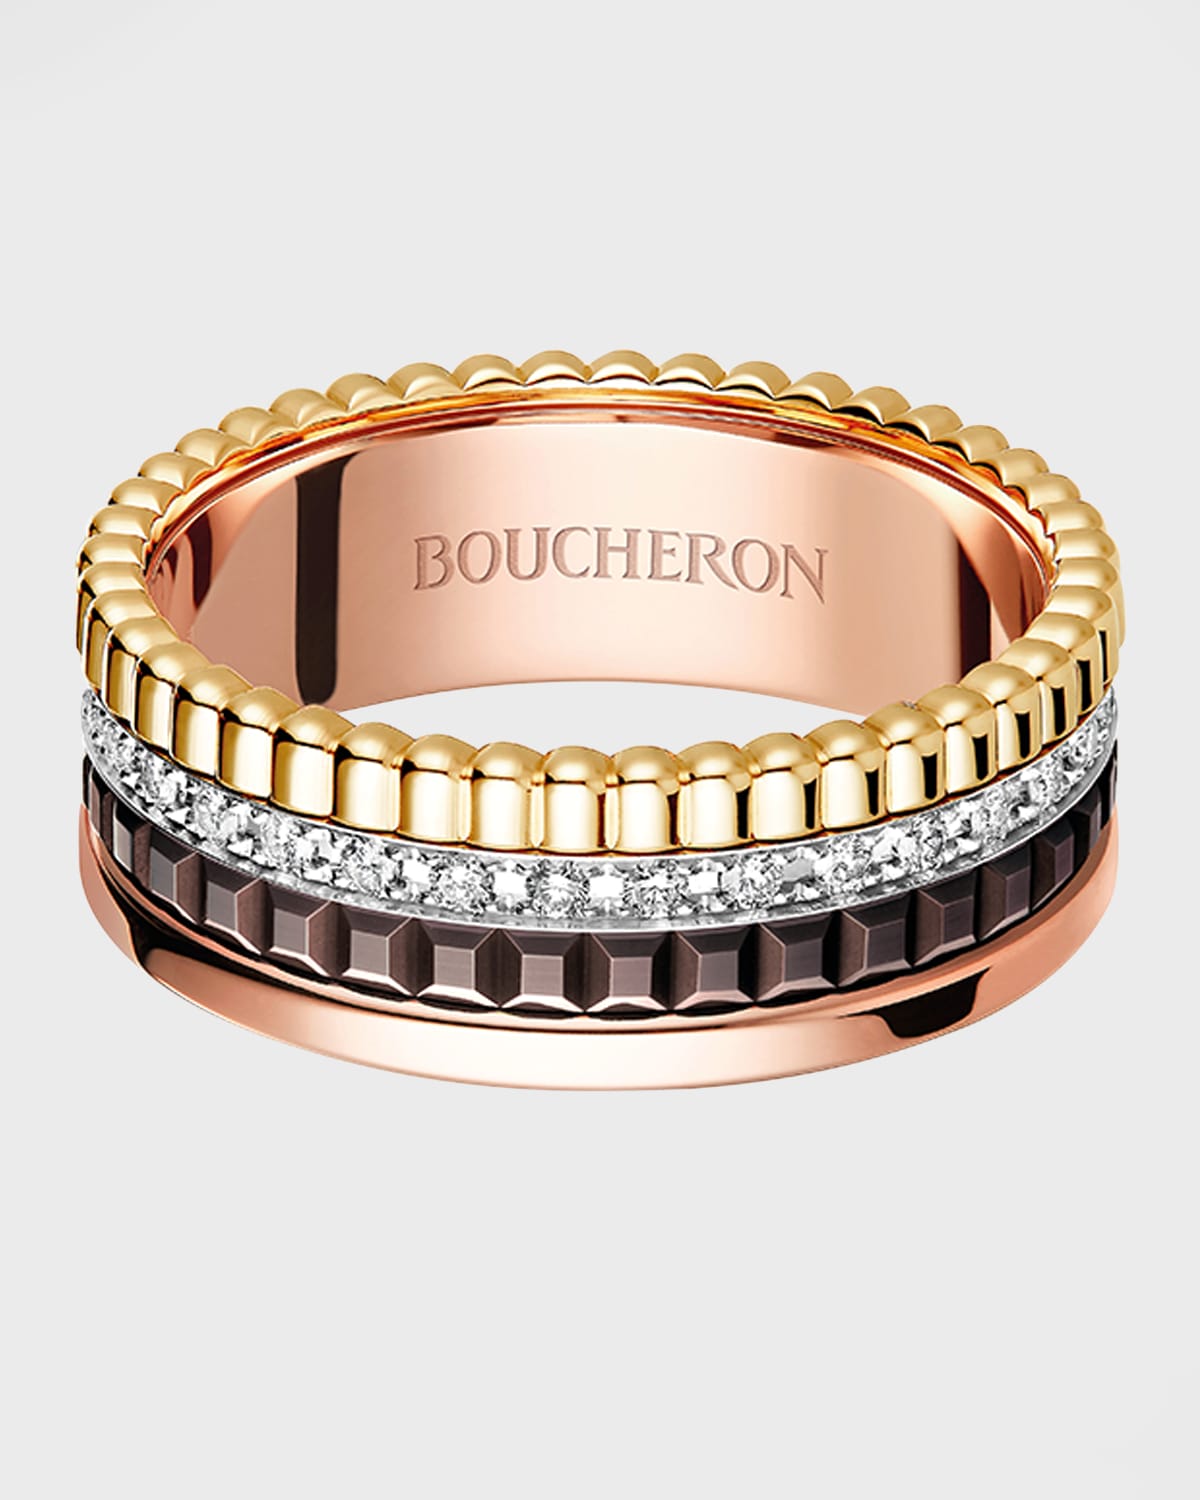 BOUCHERON QUATRE CLASSIQUE SMALL RING IN TRICOLOR GOLD WITH BROWN PVD AND DIAMONDS, EU 55 / US 7.25